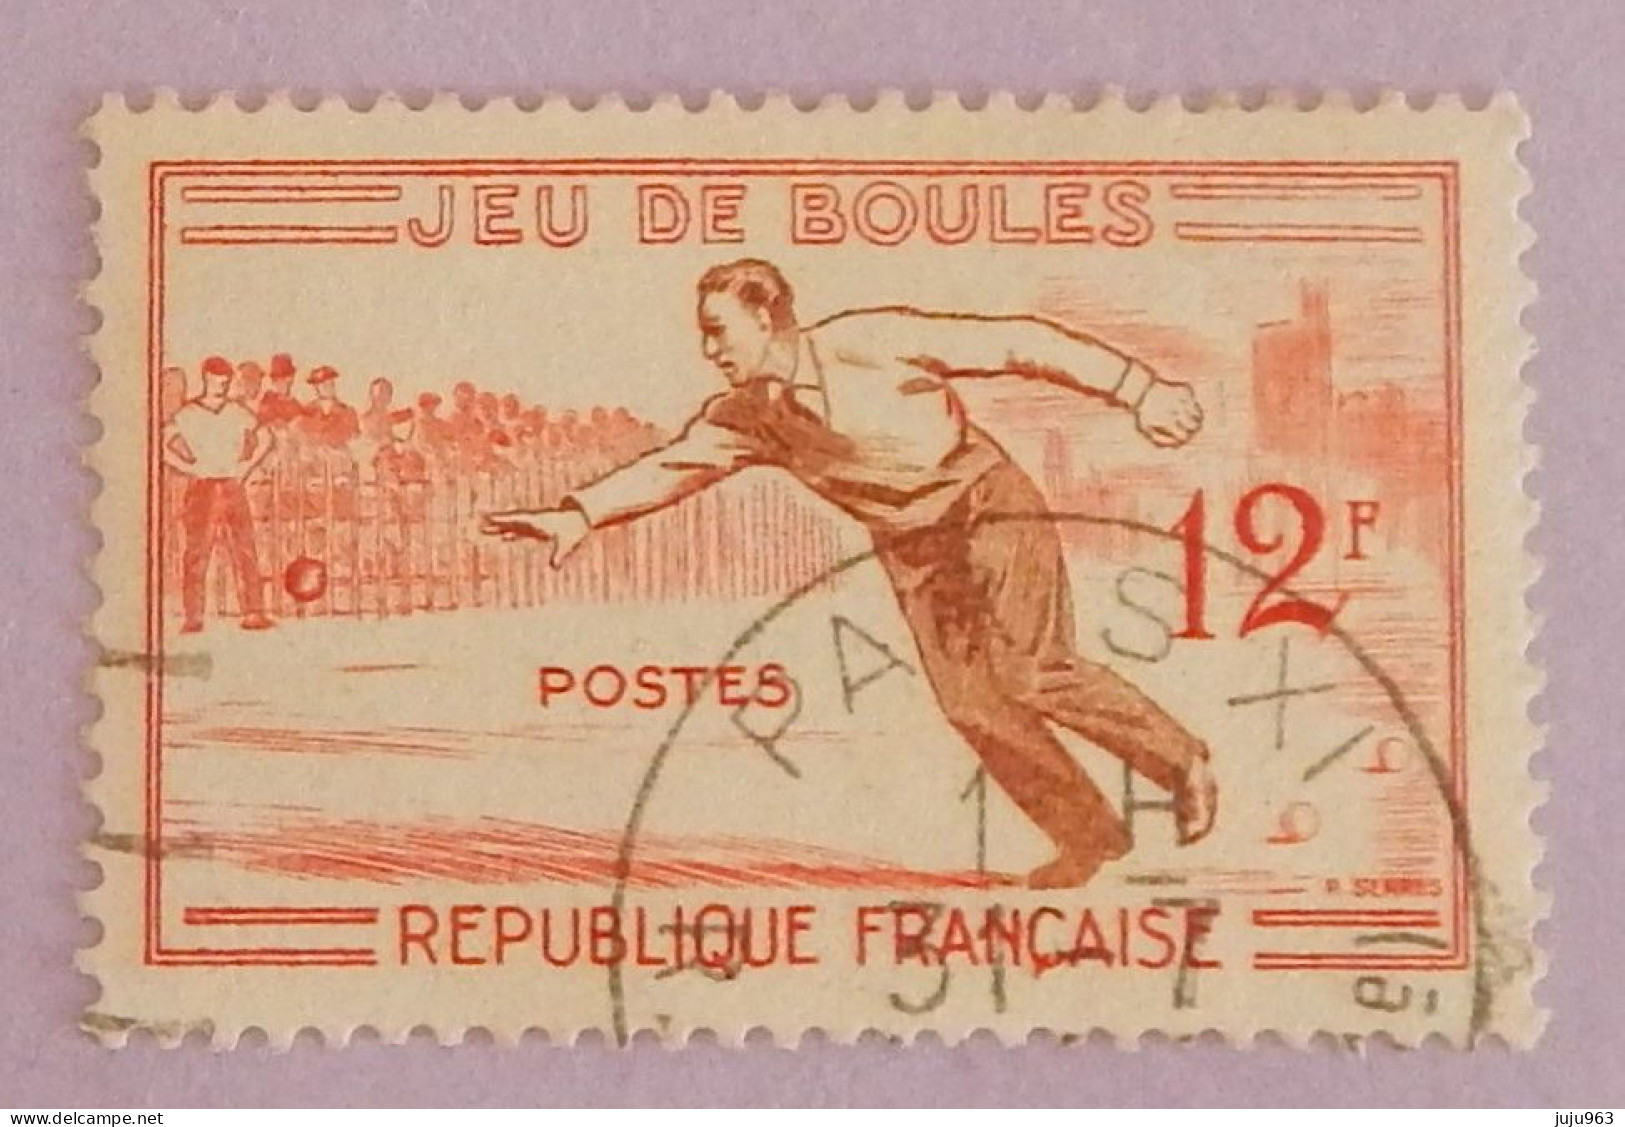 FRANCE YT 1161 CACHET ROND "JEU DE BOULES" ANNÉE 1958 - Gebraucht